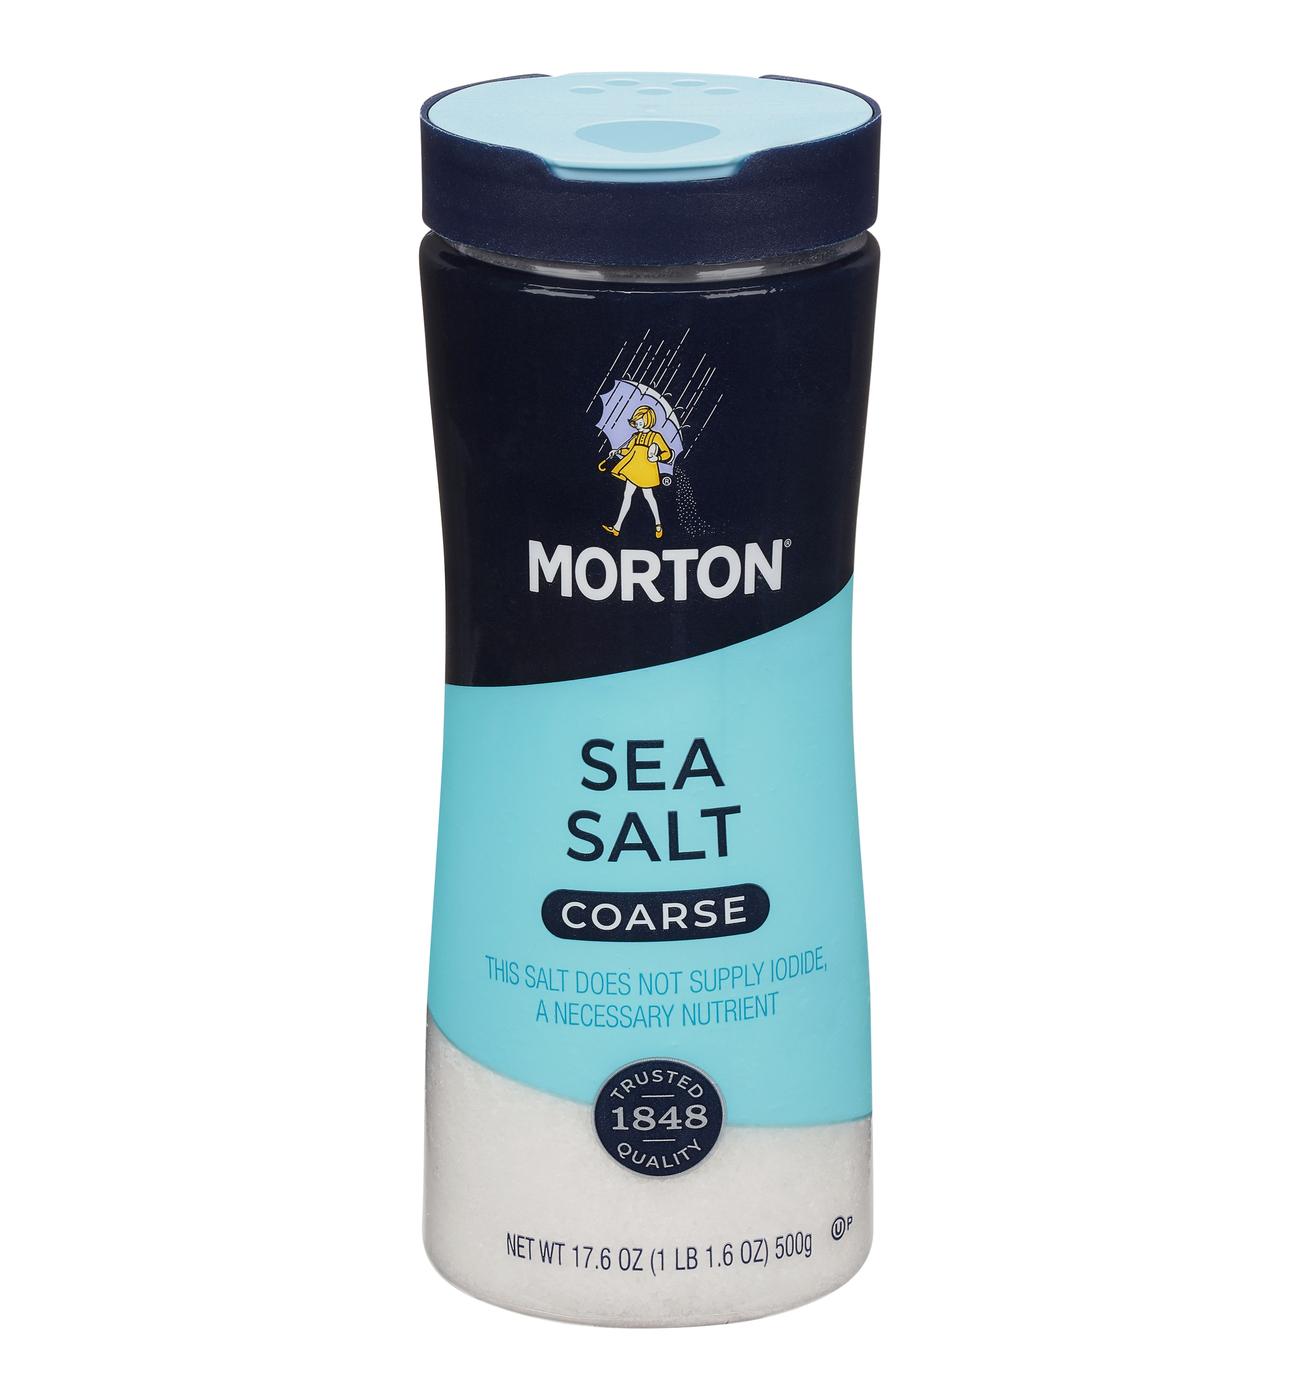 Morton Coarse Sea Salt; image 1 of 8